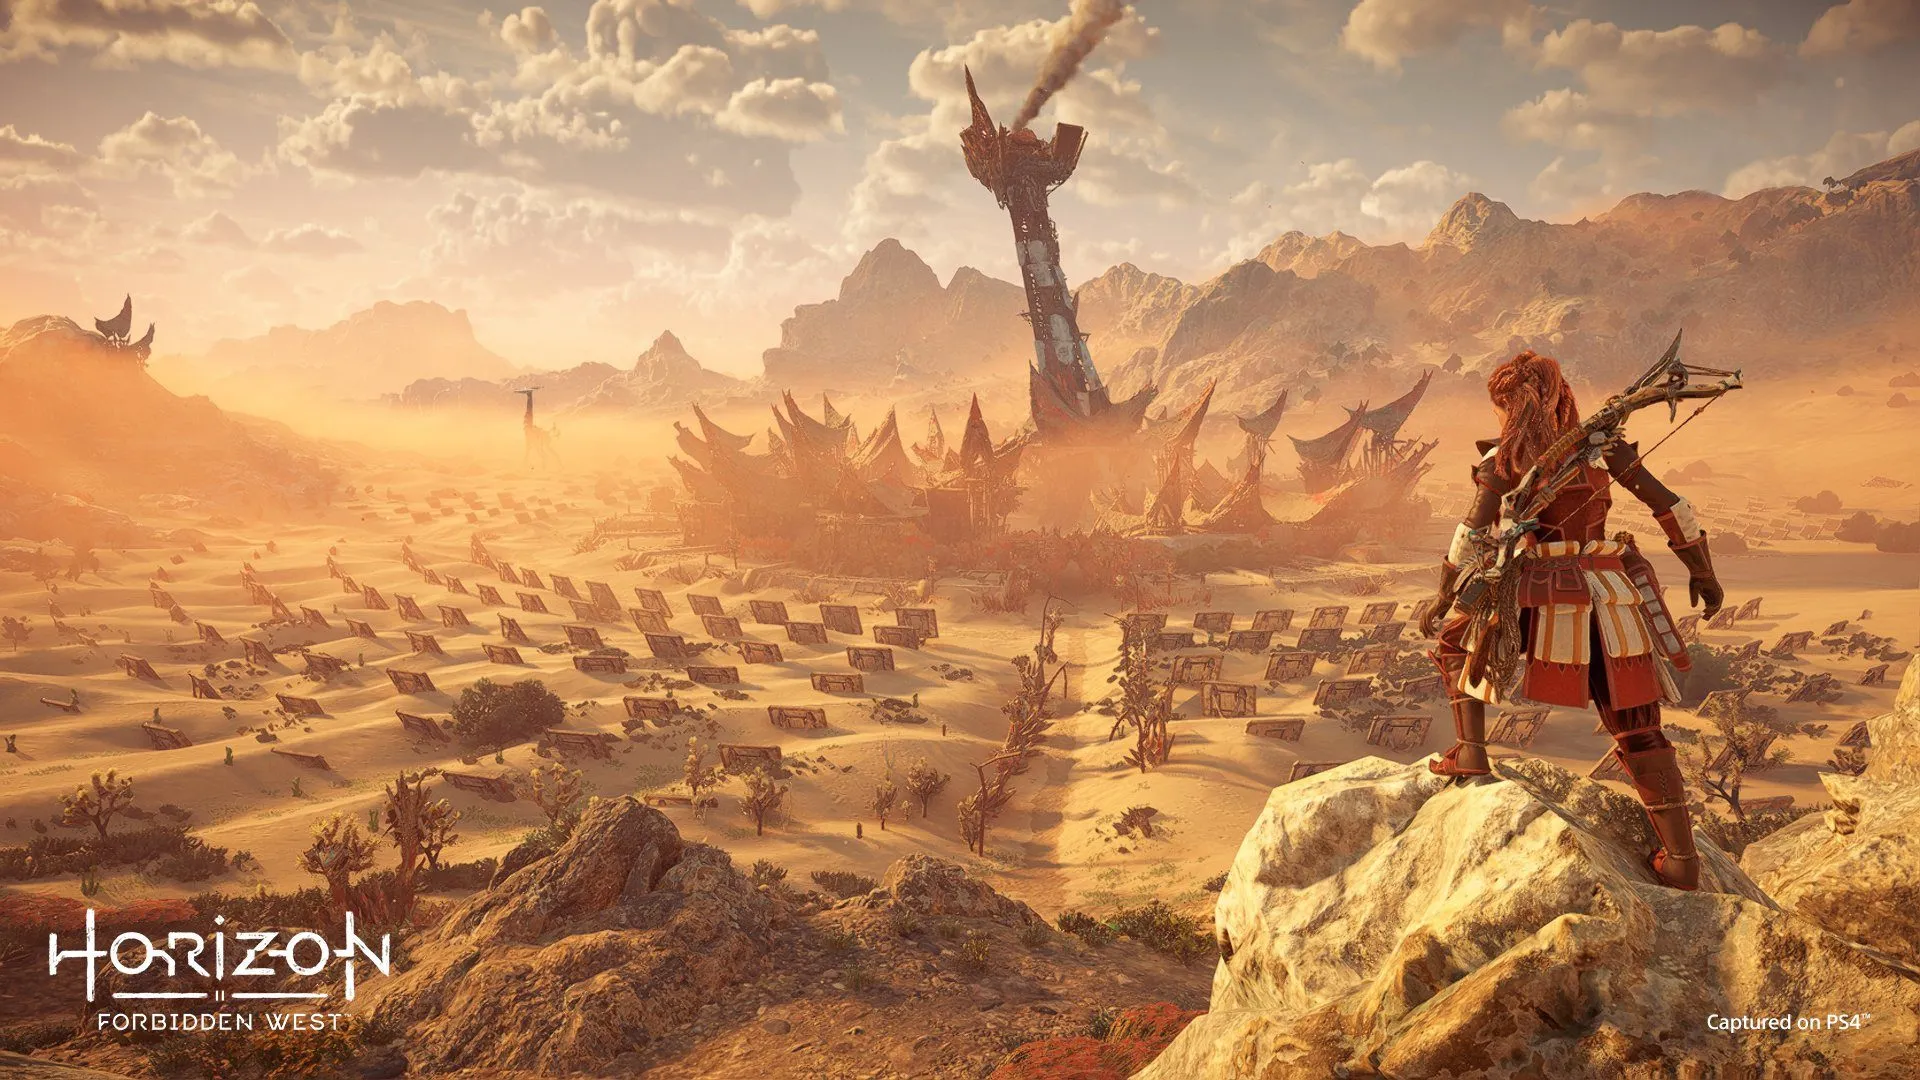 Guerrilla posted the first Horizon Forbidden West PS4 screenshots